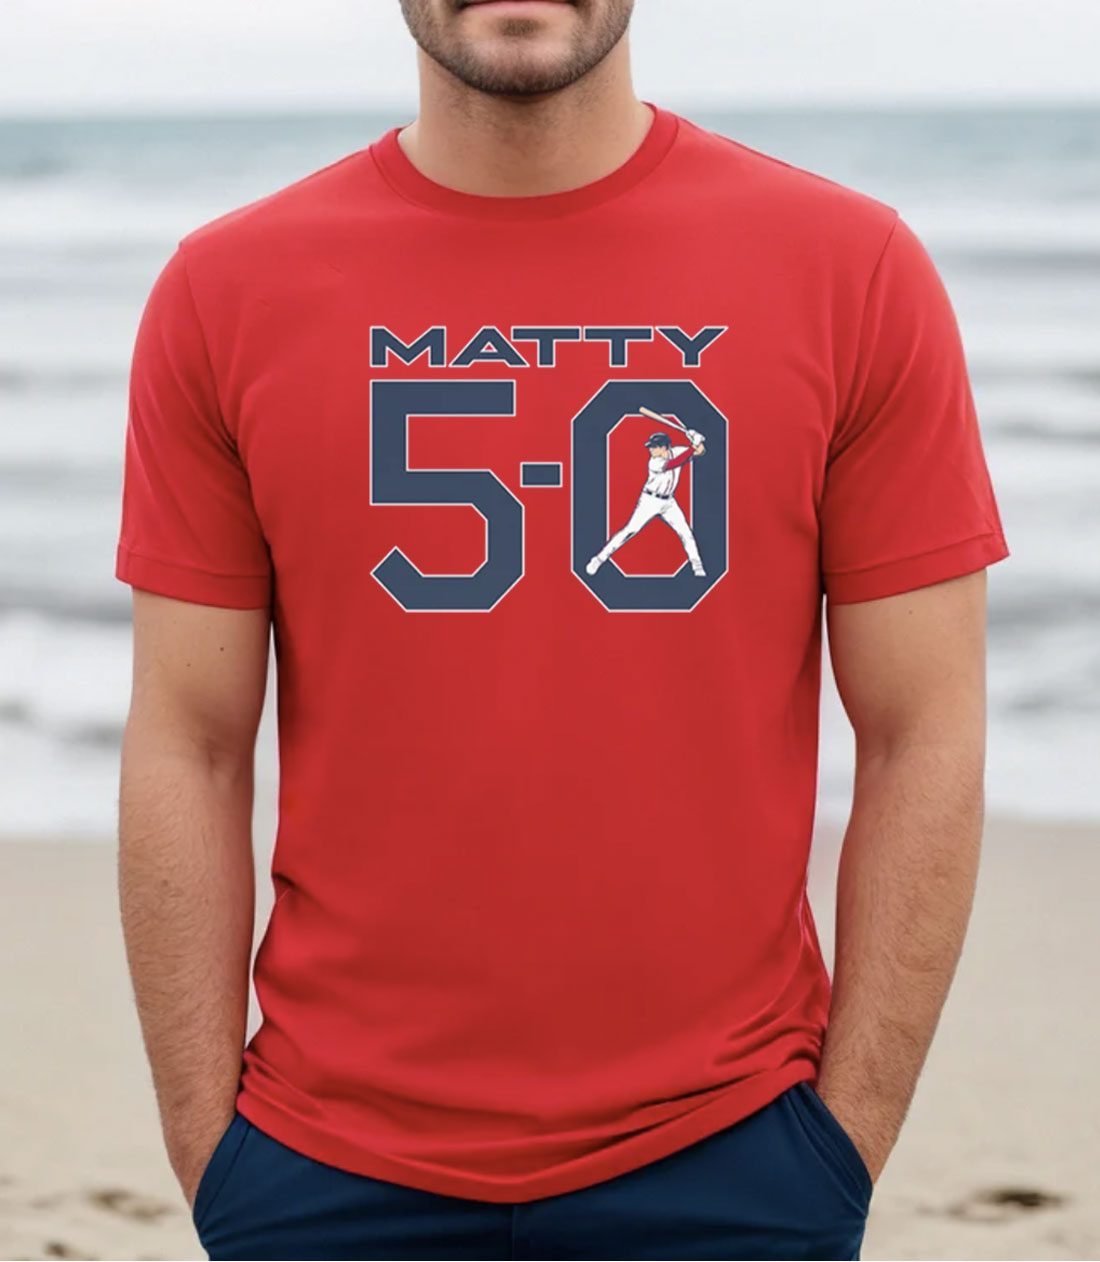 Matt Olson Matty 5-0 Atlanta T-Shirt - ReviewsTees